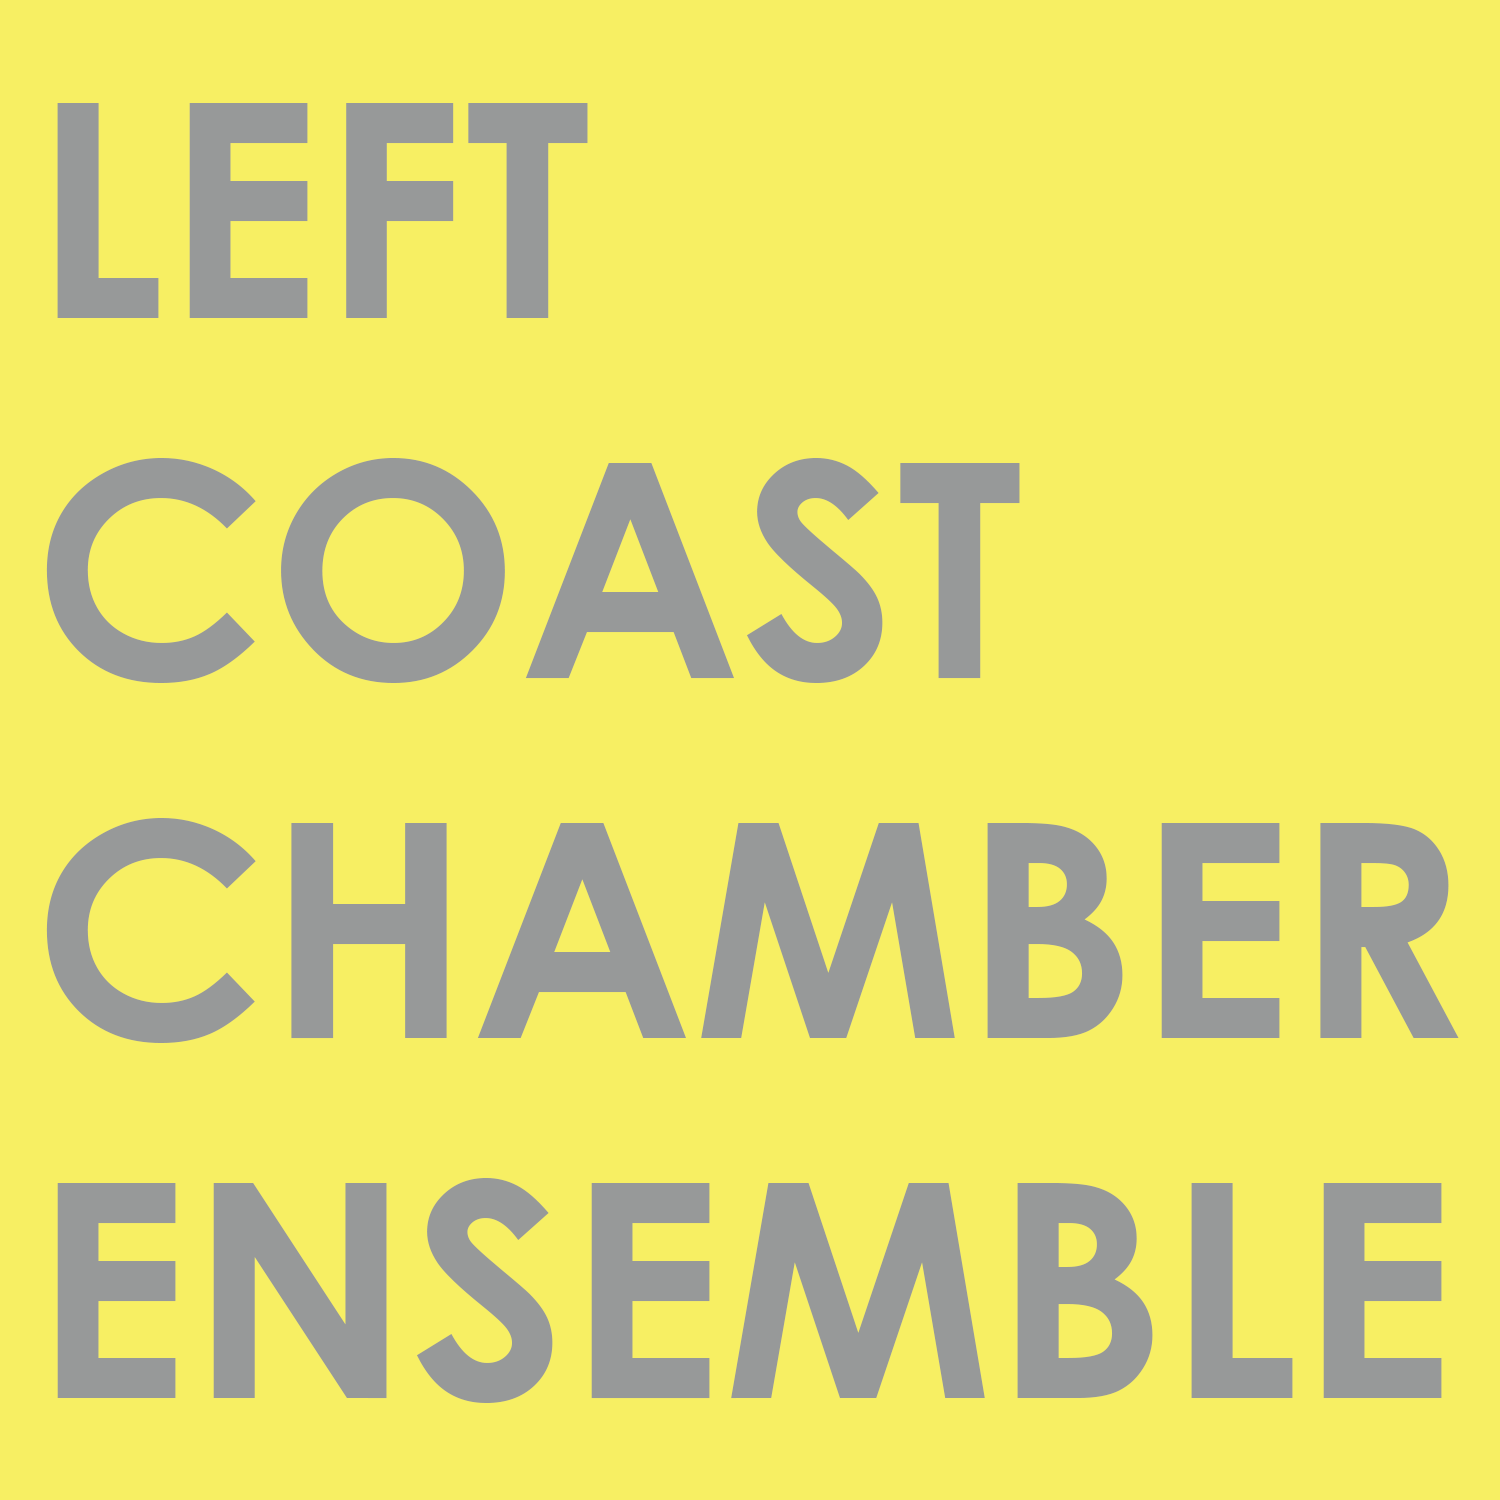 Left Coast Chamber Ensemble